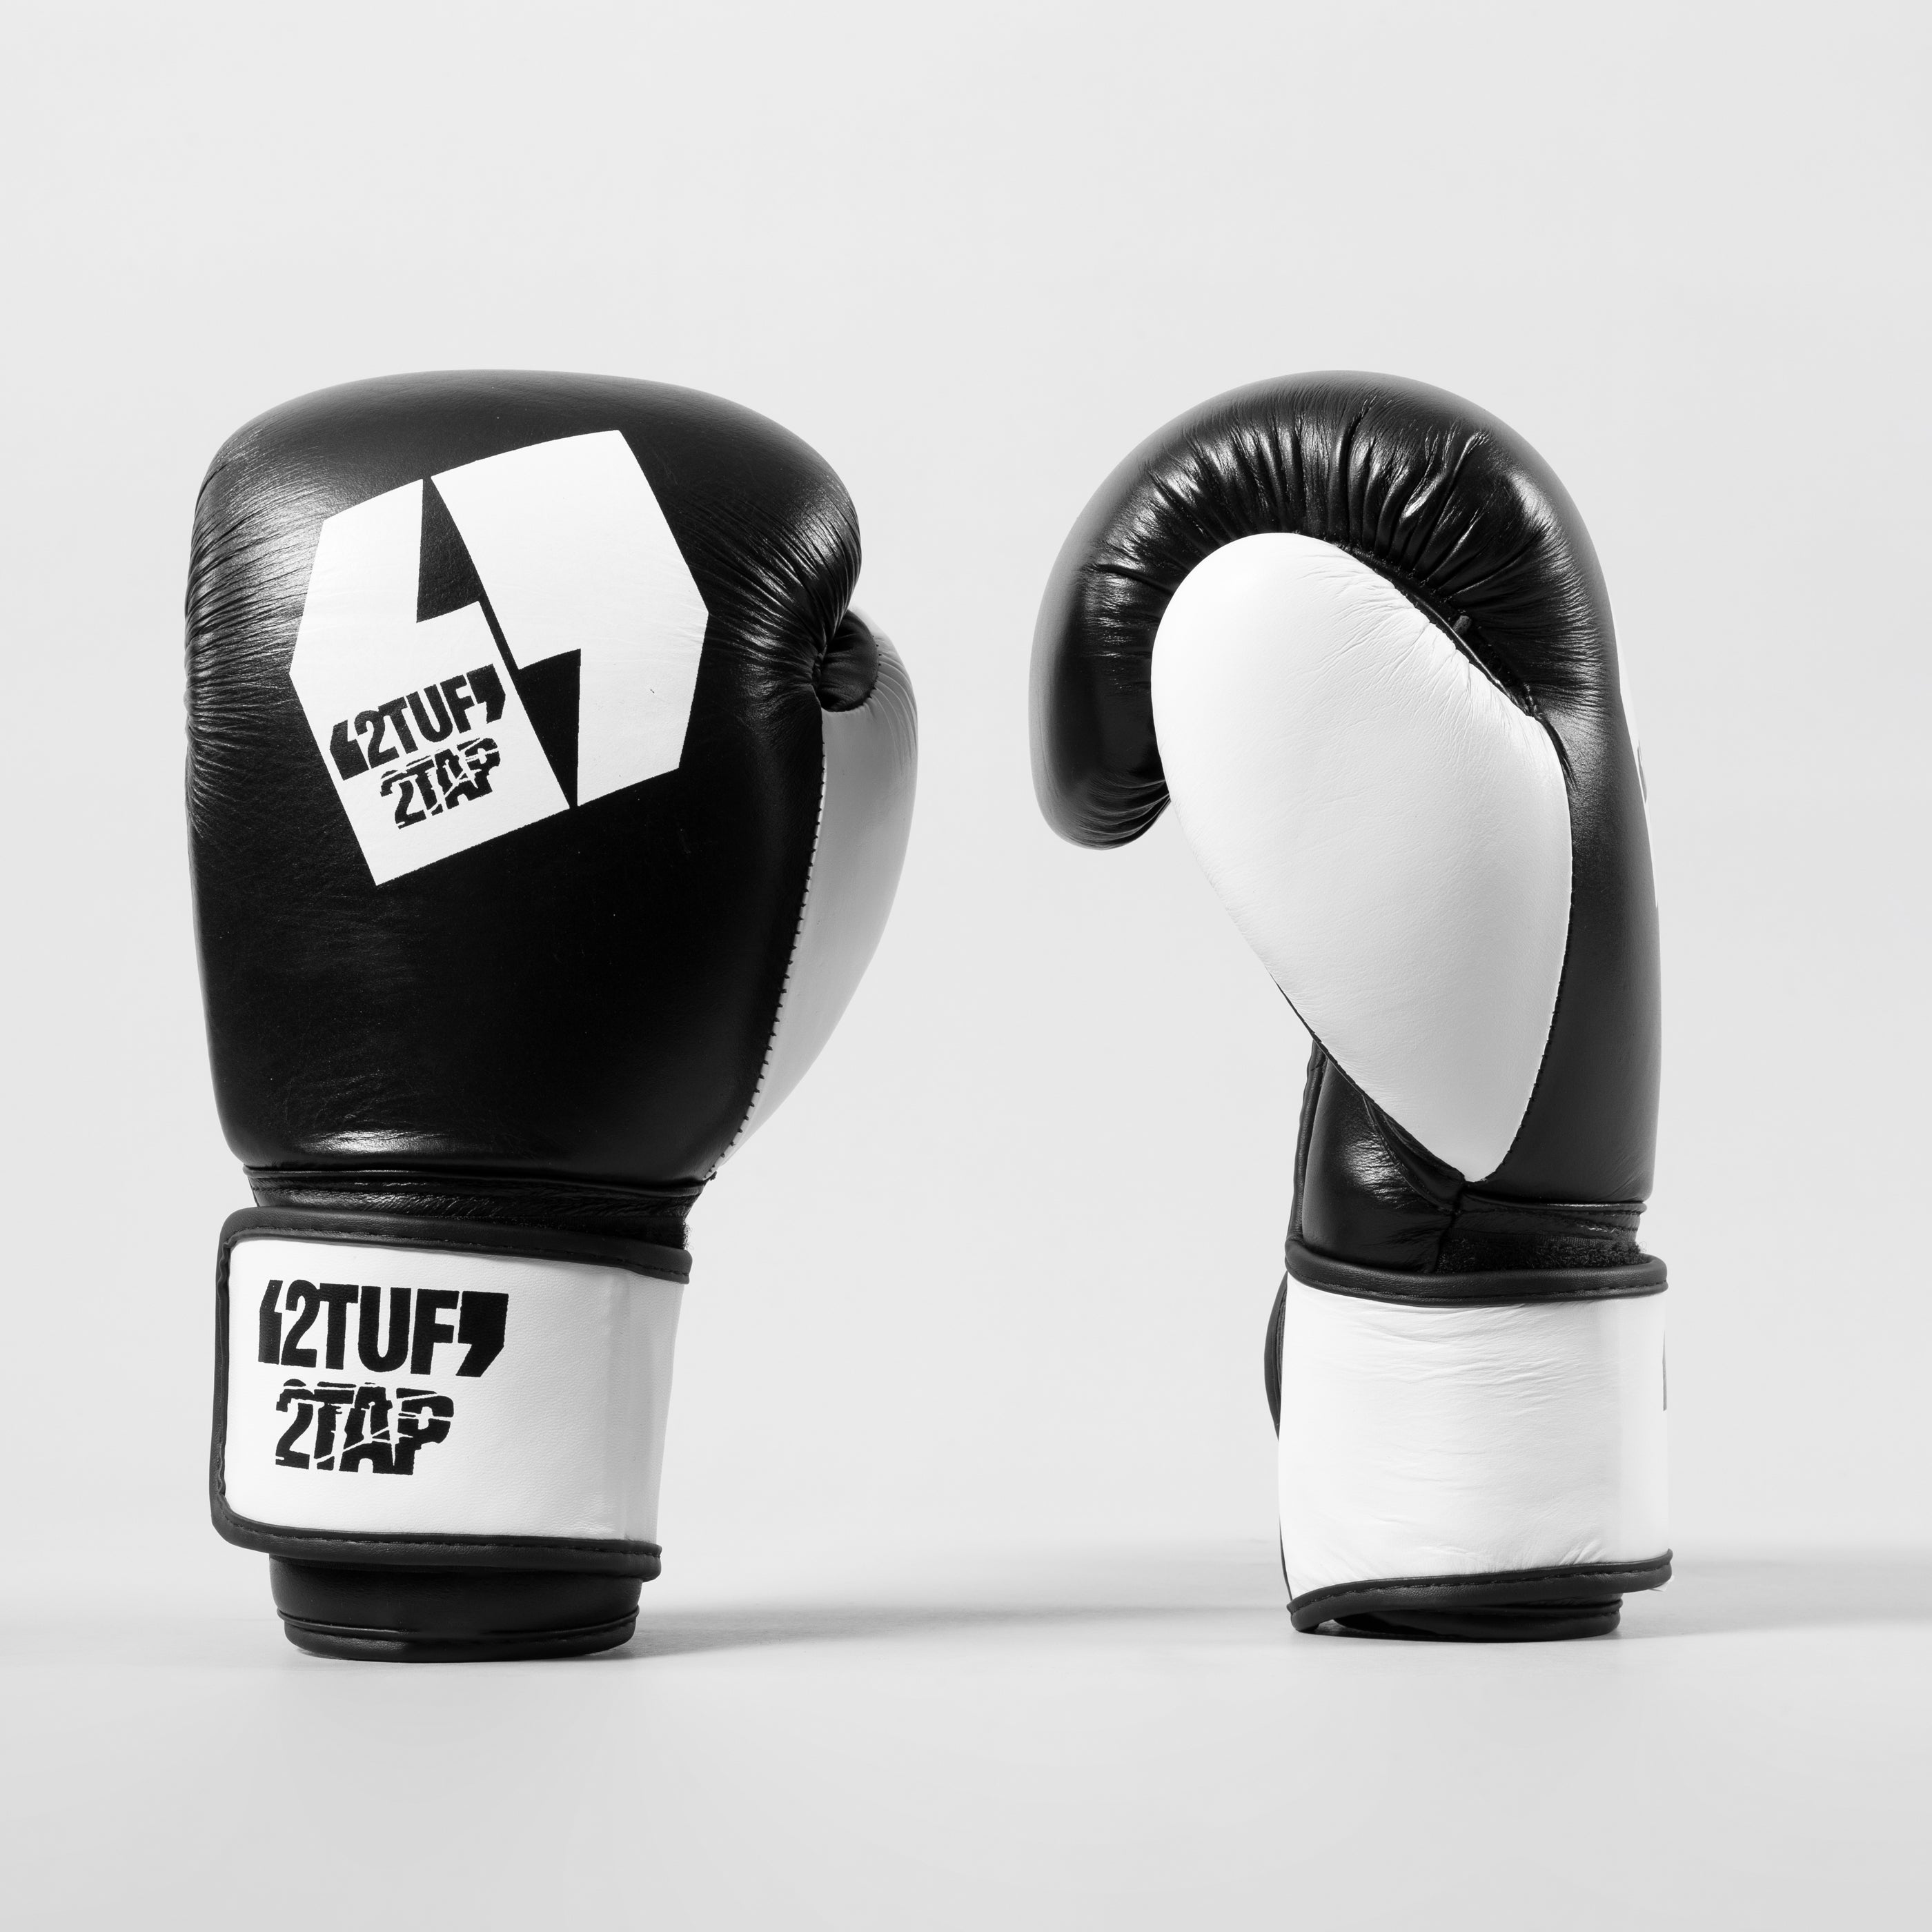 'Viktor' Professional Boxing Gloves - Cowhide Leather - Black/White 2TUF2TAP